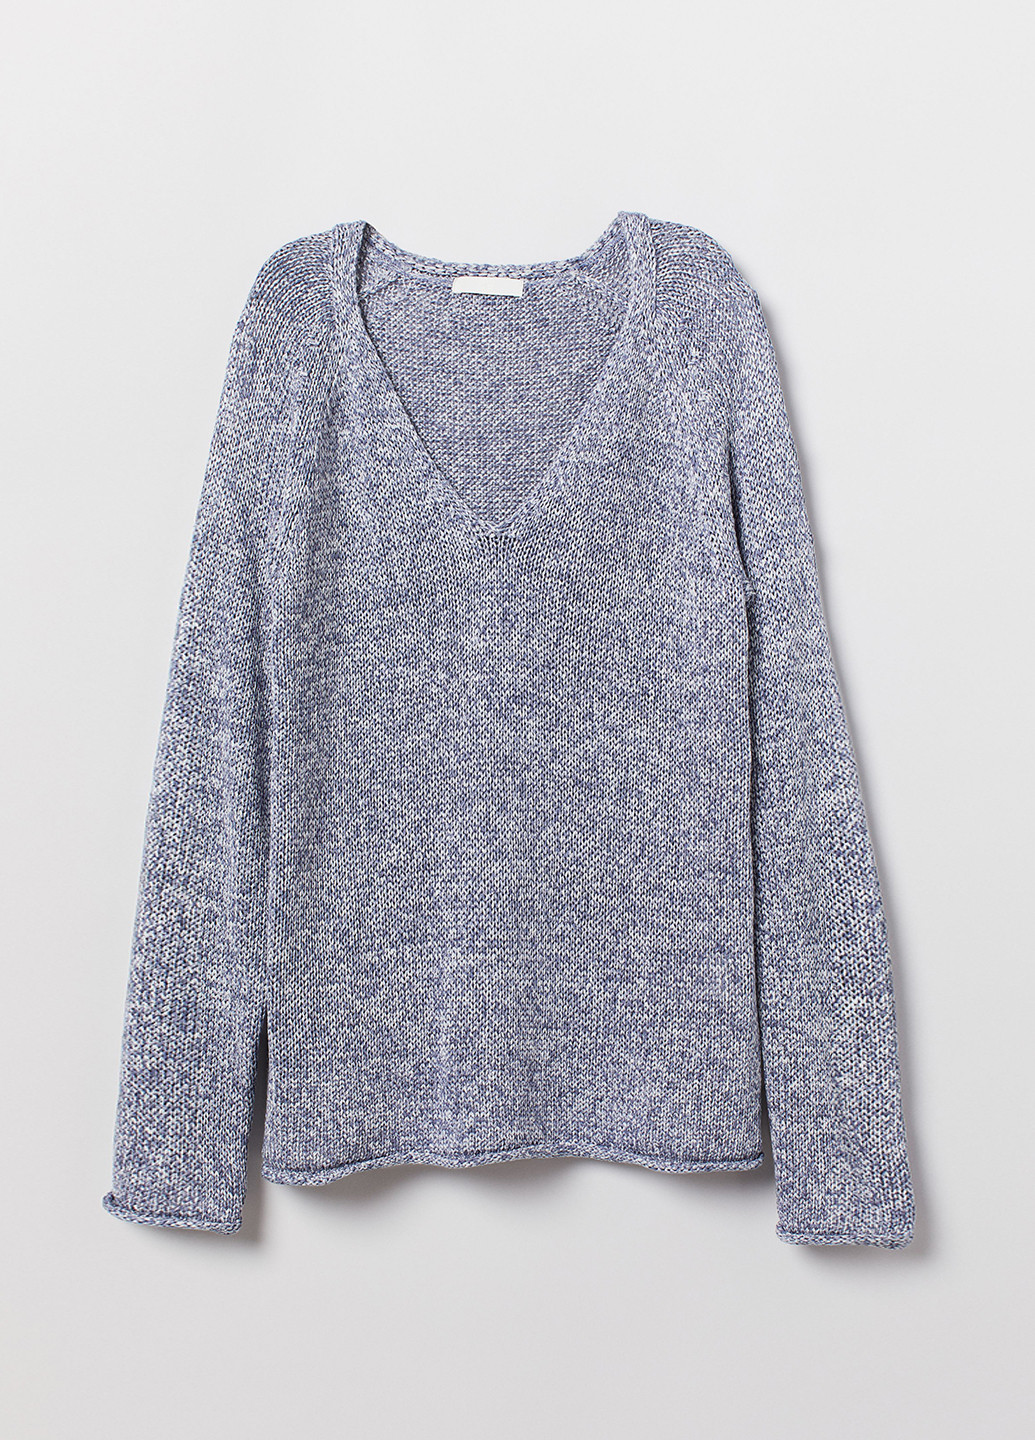 Синий демисезонный пуловер пуловер H&M